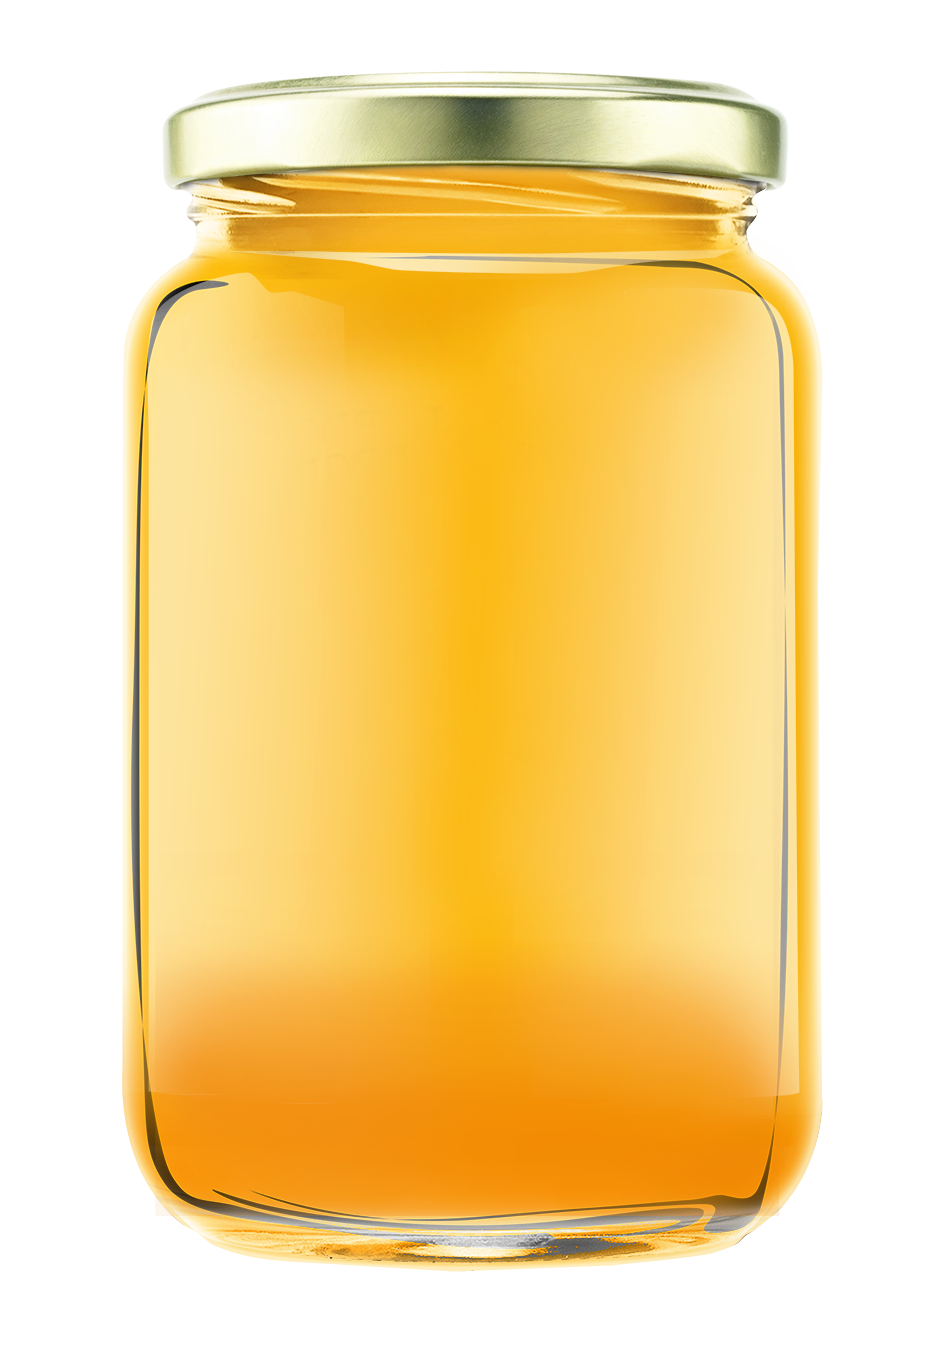 Download Honey Jar Png Image Purepng Free Transparent Cc0 Png Image Library PSD Mockup Templates